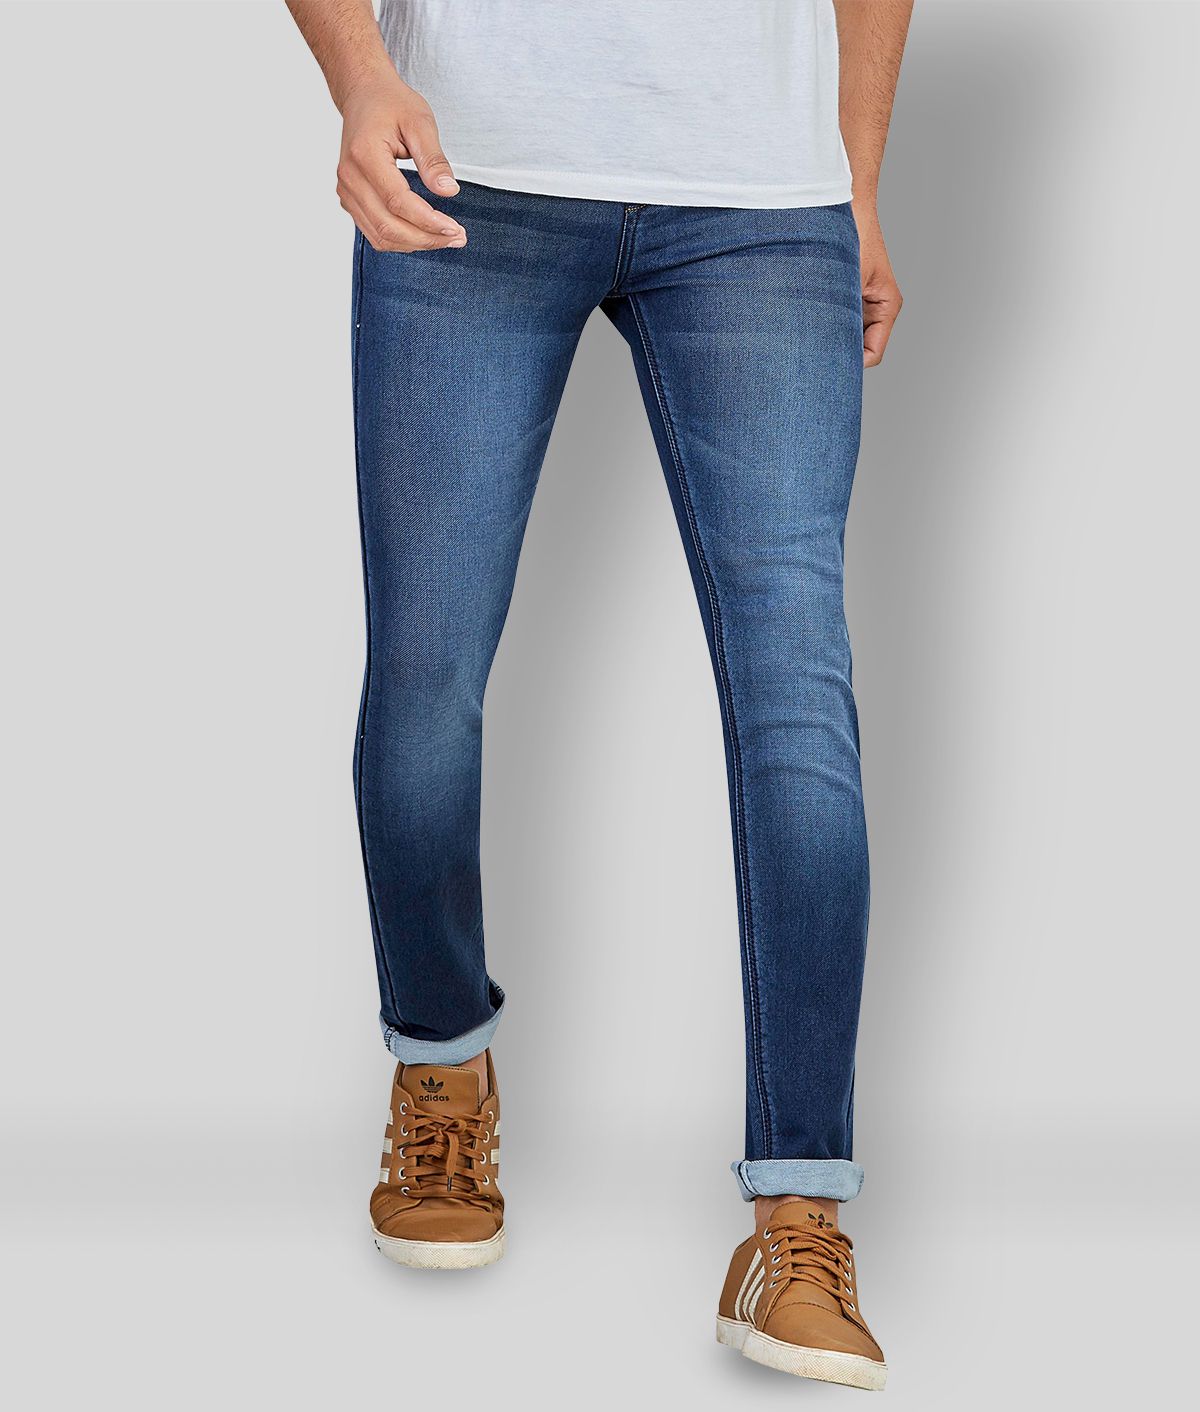 Hasasi Denim - Blue Cotton Blend Regular Fit Men's Jeans ( Pack of 1 )